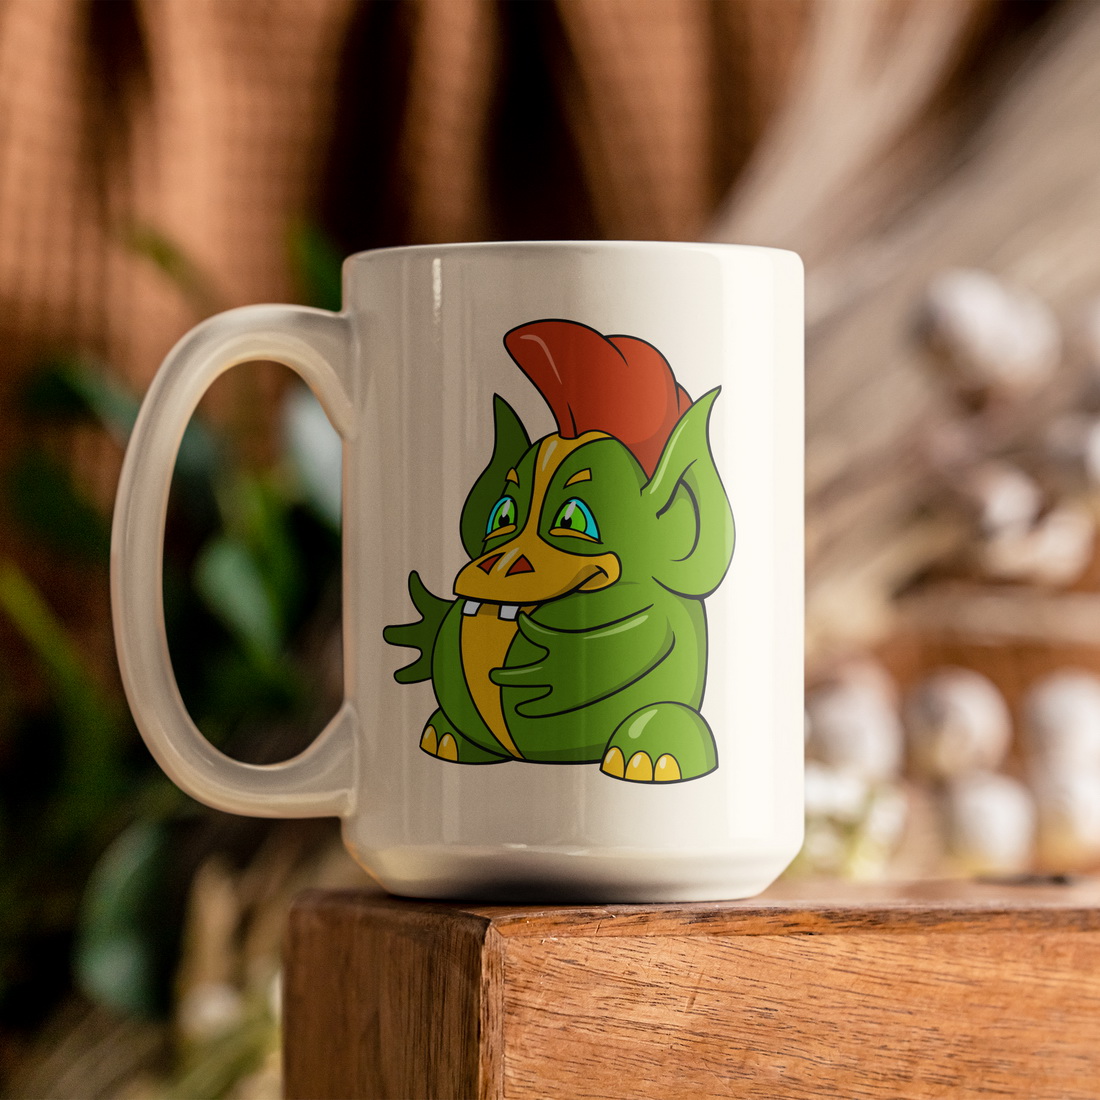 White coffee mug with a green dragon on it.